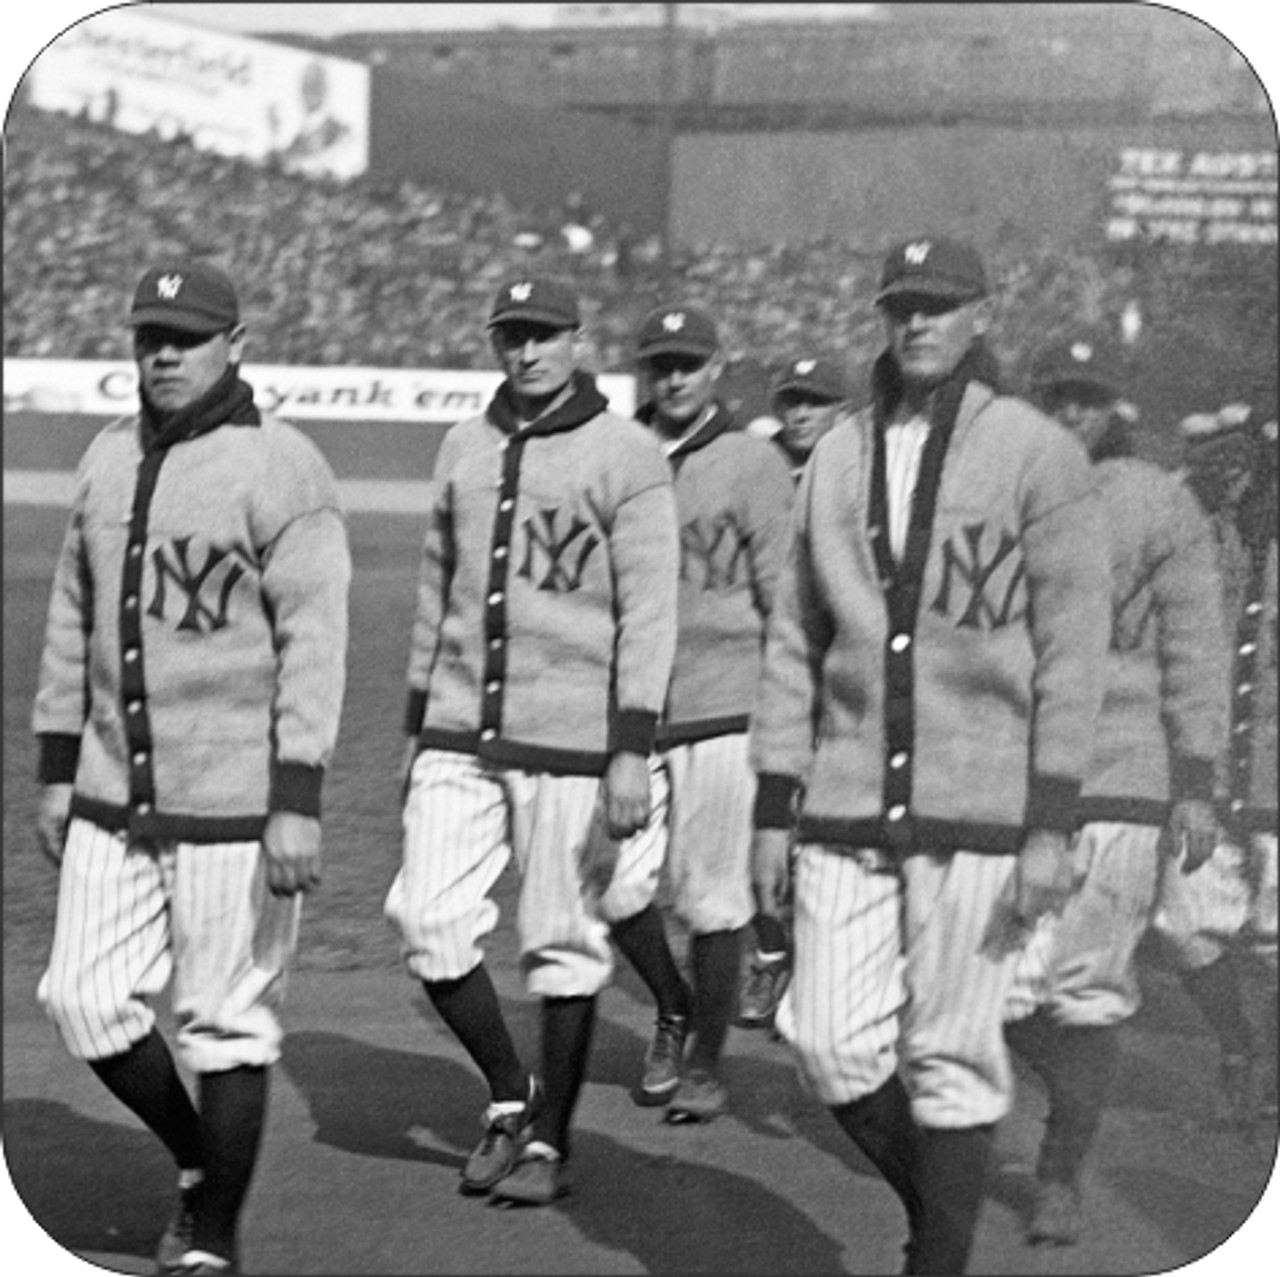 Set of 4 Coaters babe ruth opening day 19223 yankee stadium.jpg